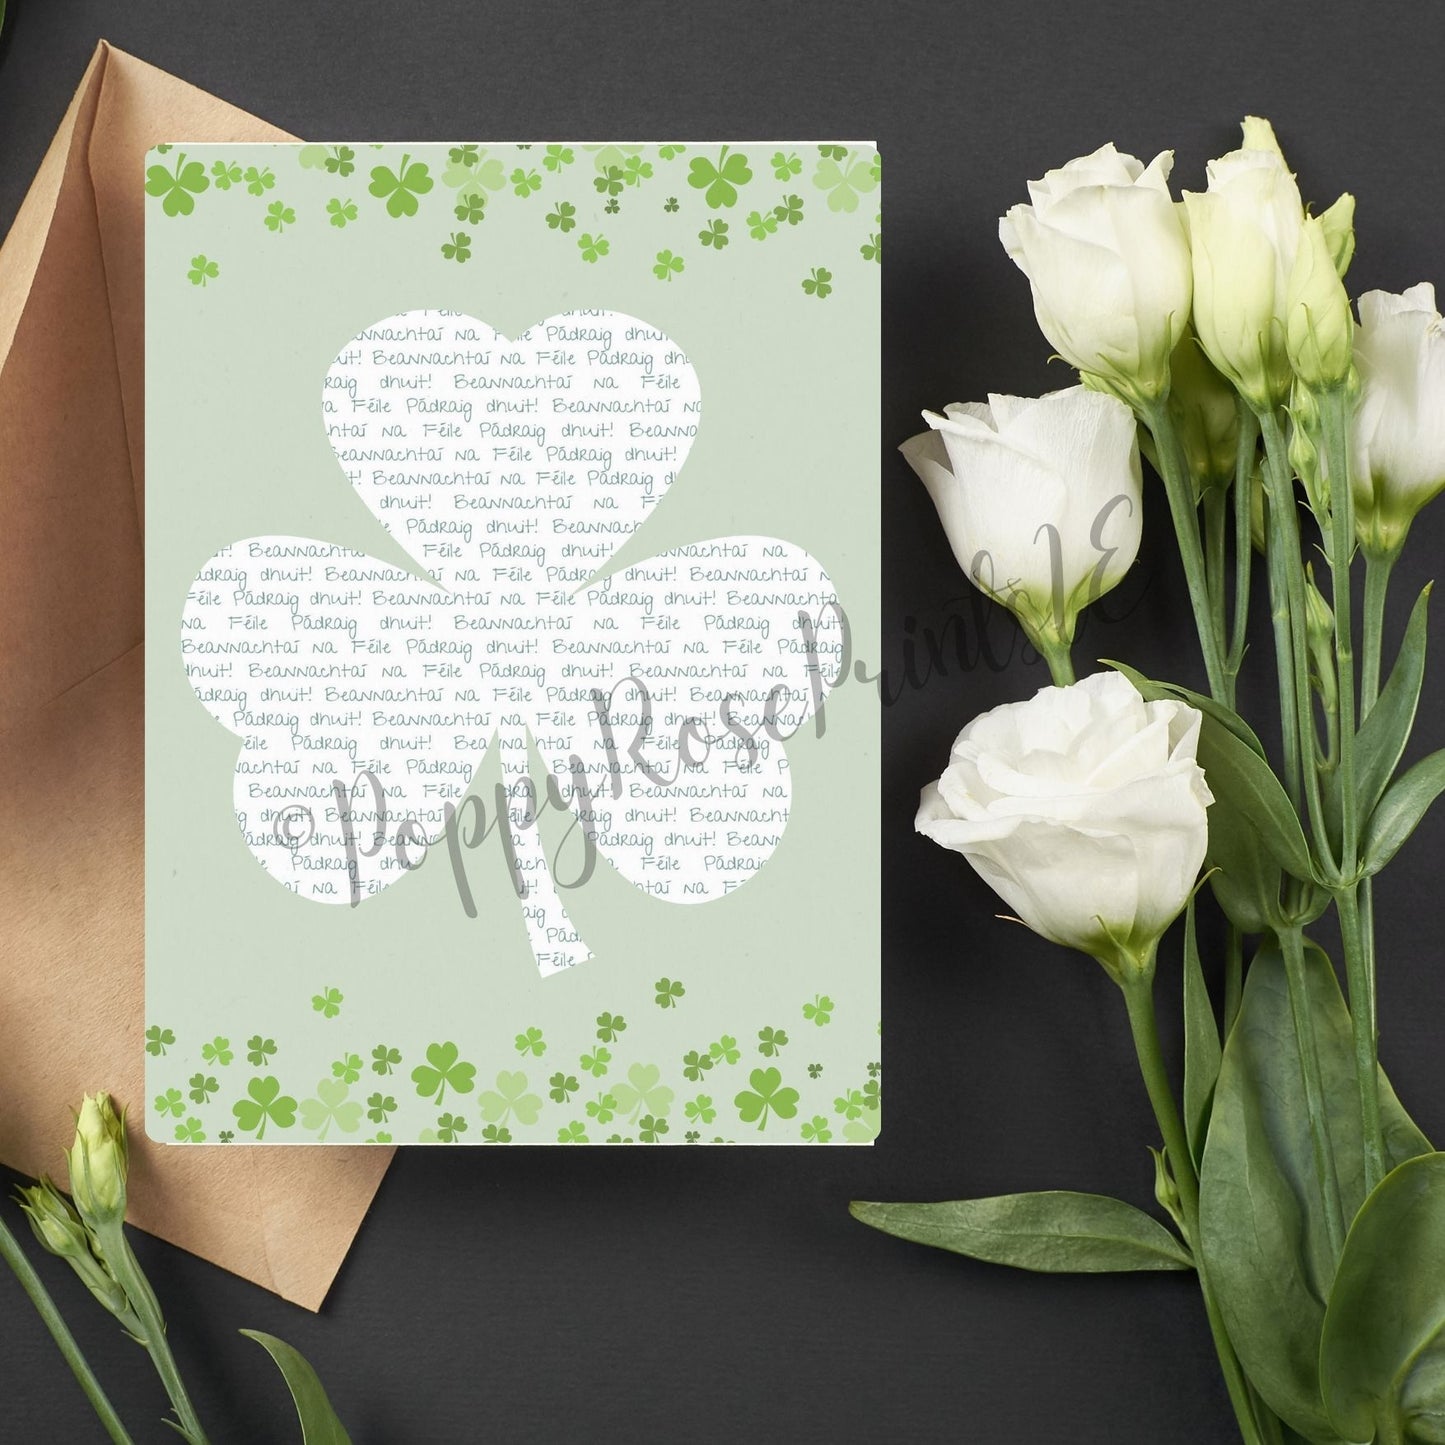 St Patrick's Day - Font Filled Shamrock - Greeting Card